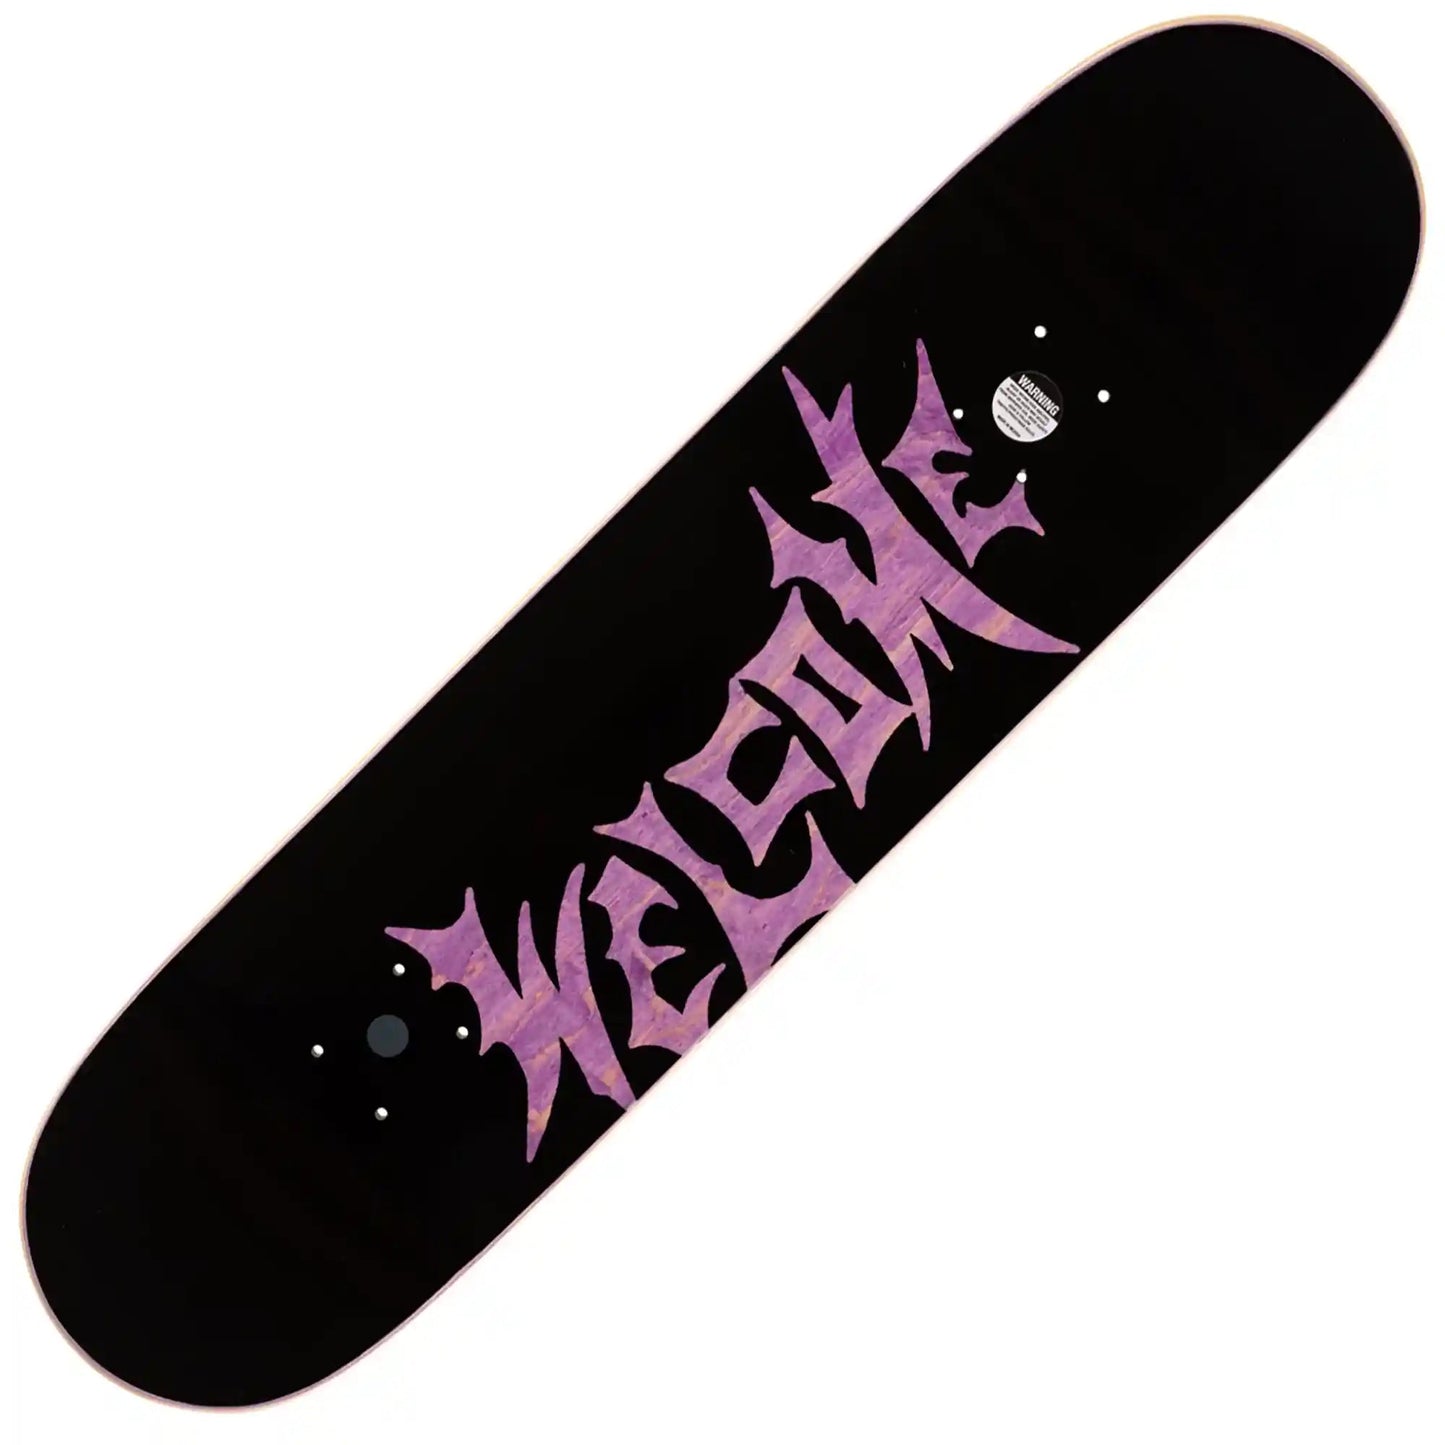 Welcome Lil Owl Deck (8.0") - Tiki Room Skateboards - 2